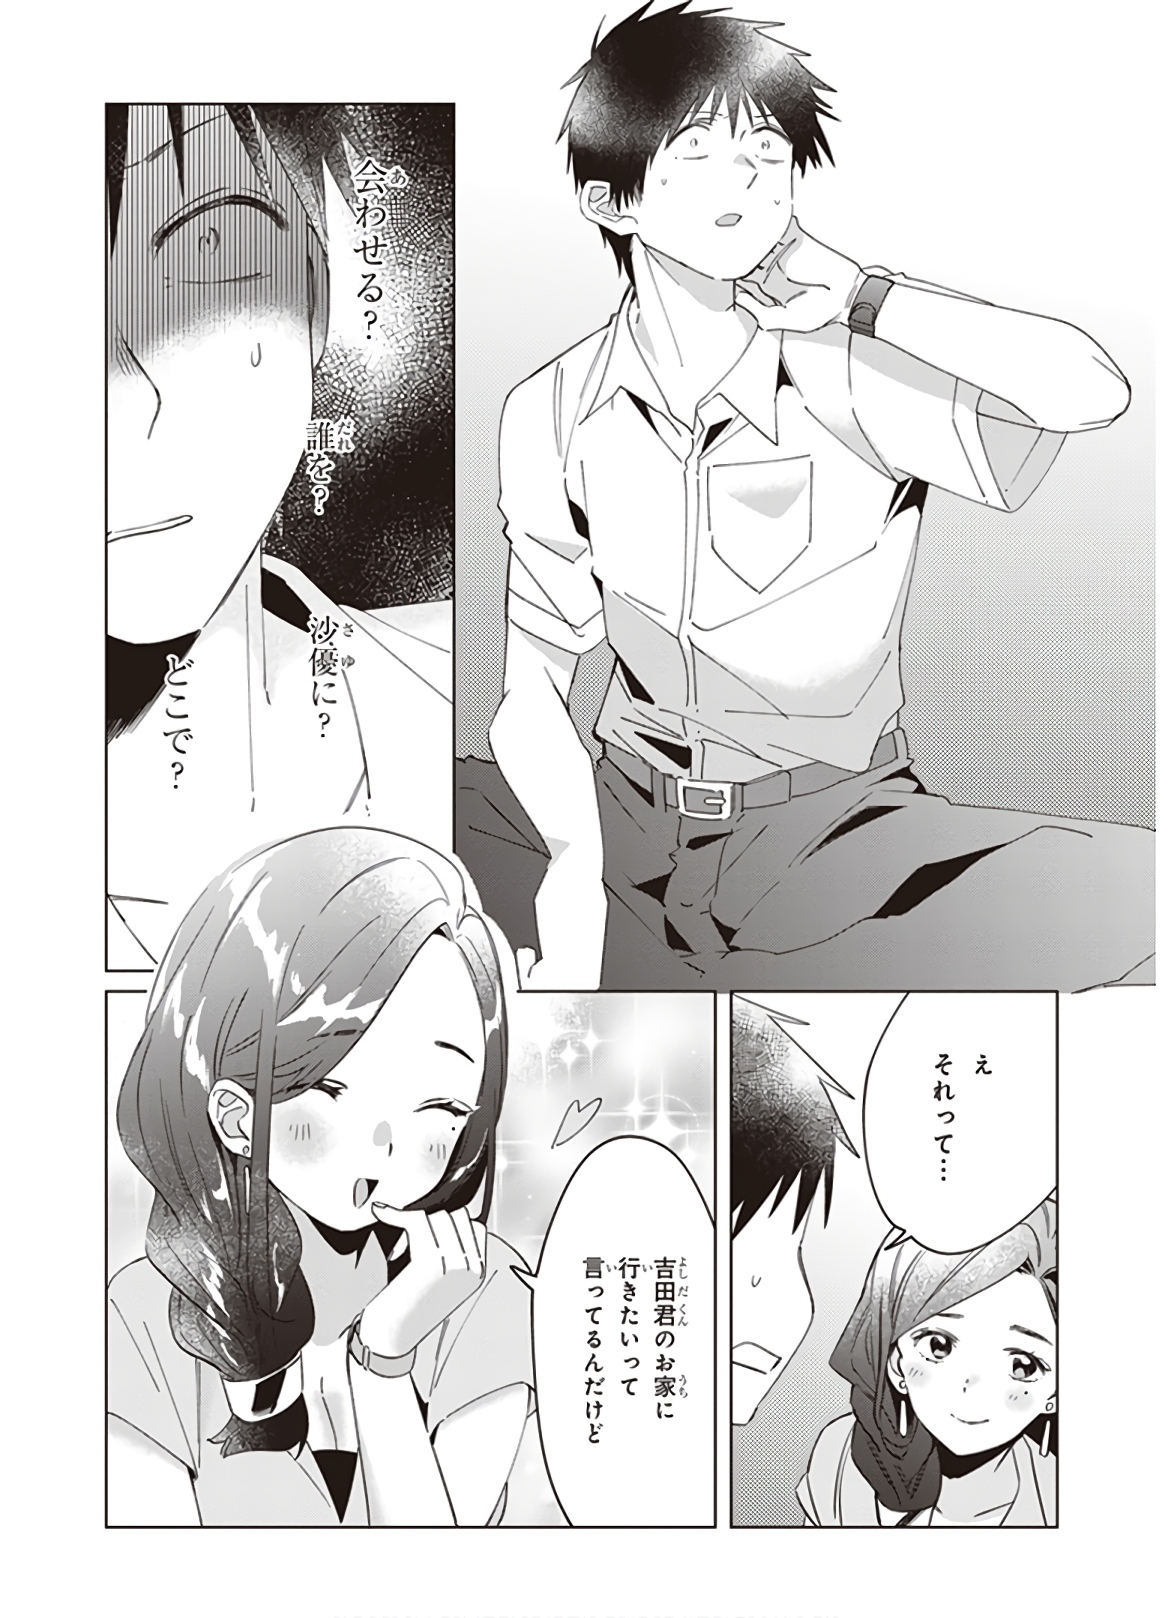 Hige wo Soru. Soshite Joshikousei wo Hirou. - Chapter 14 - Page 34